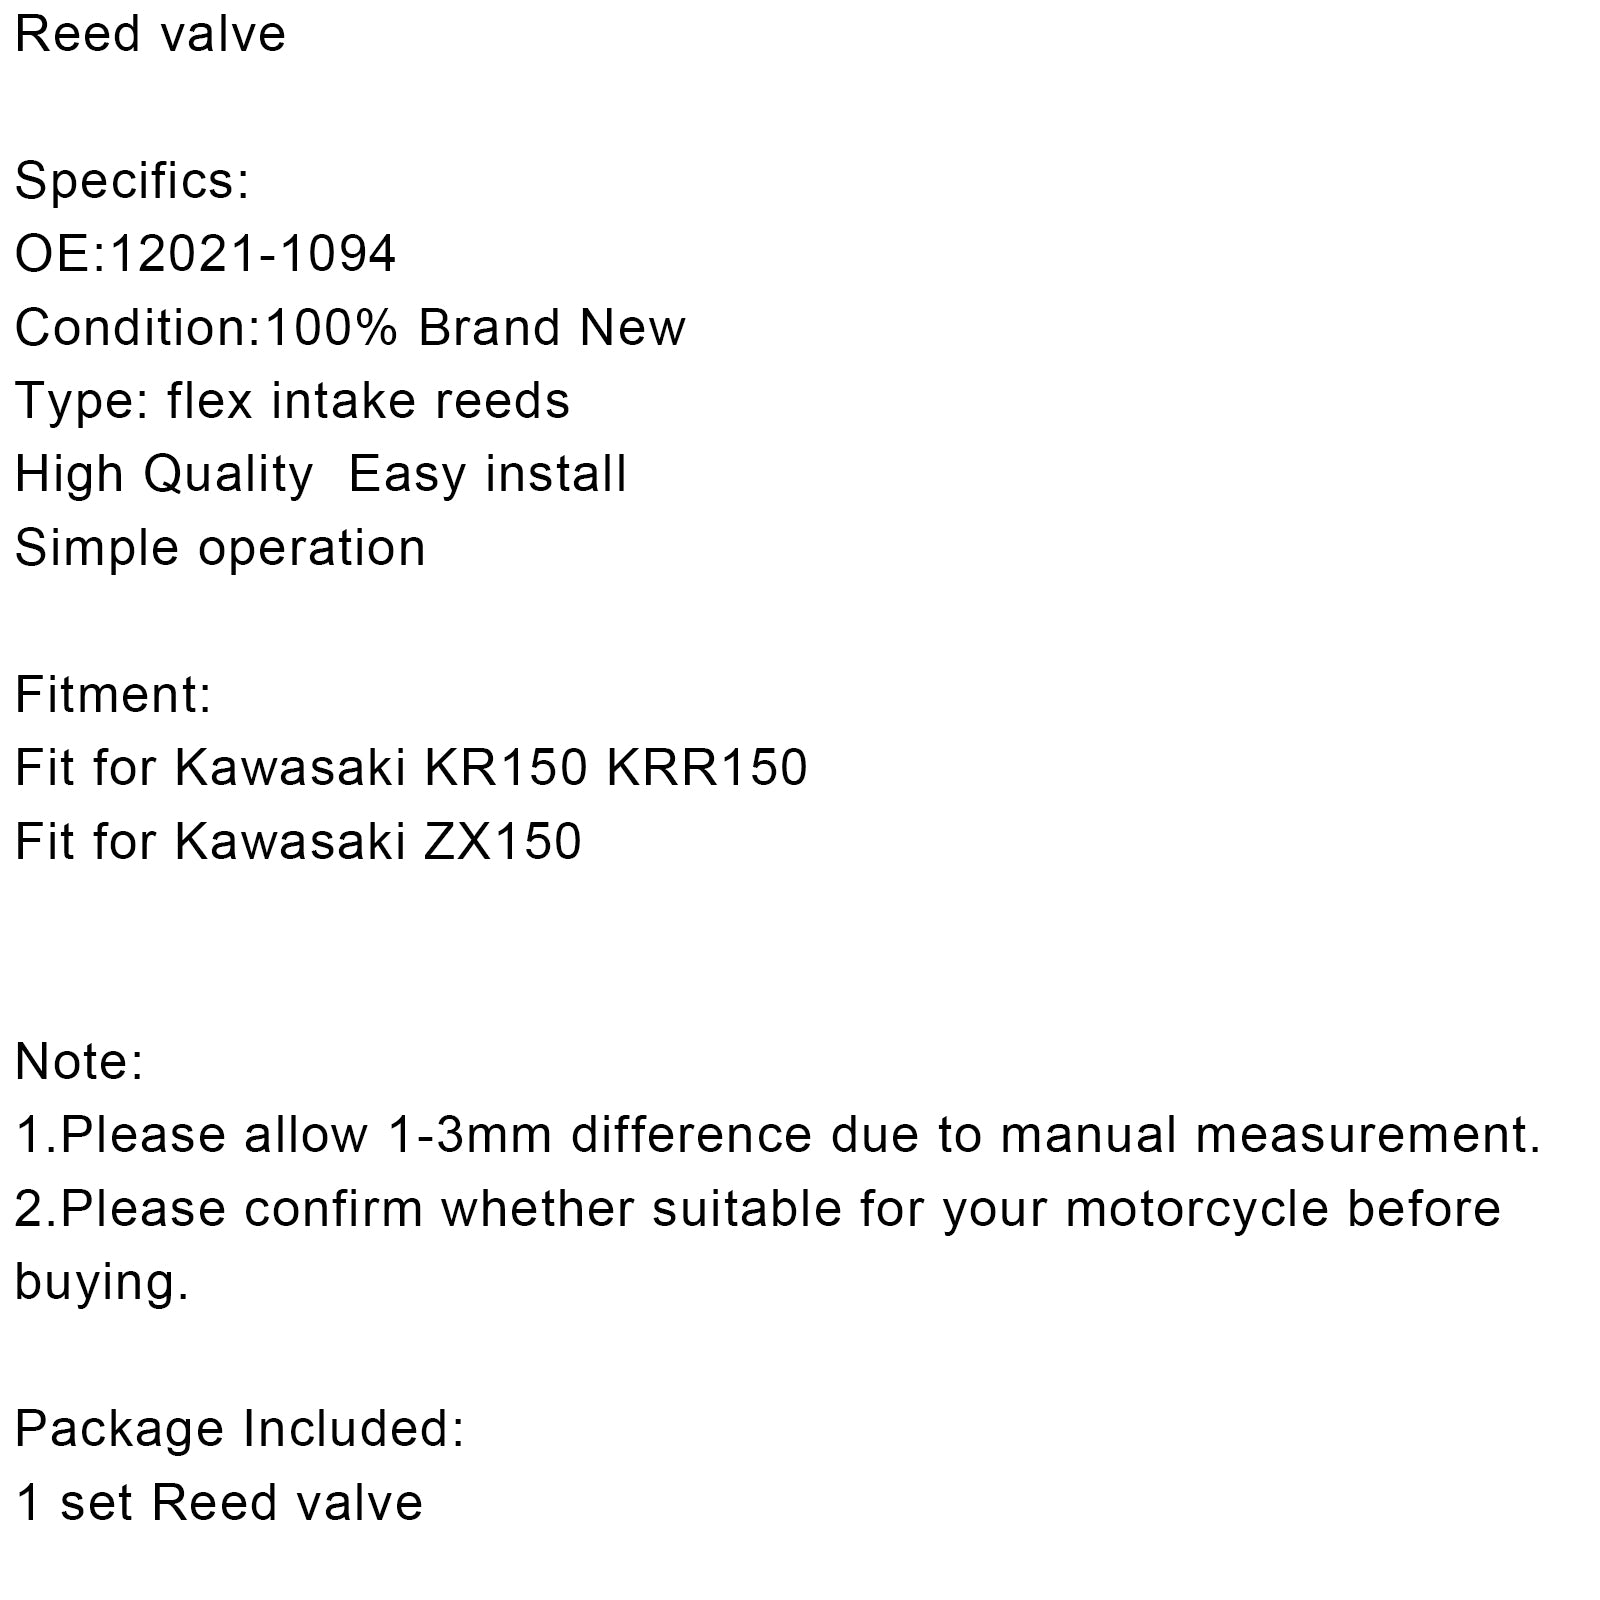 Reed Valve System Fits For Kawasaki KR150 KRR150 ZX150 125cc 250cc 12021-1094 Generic